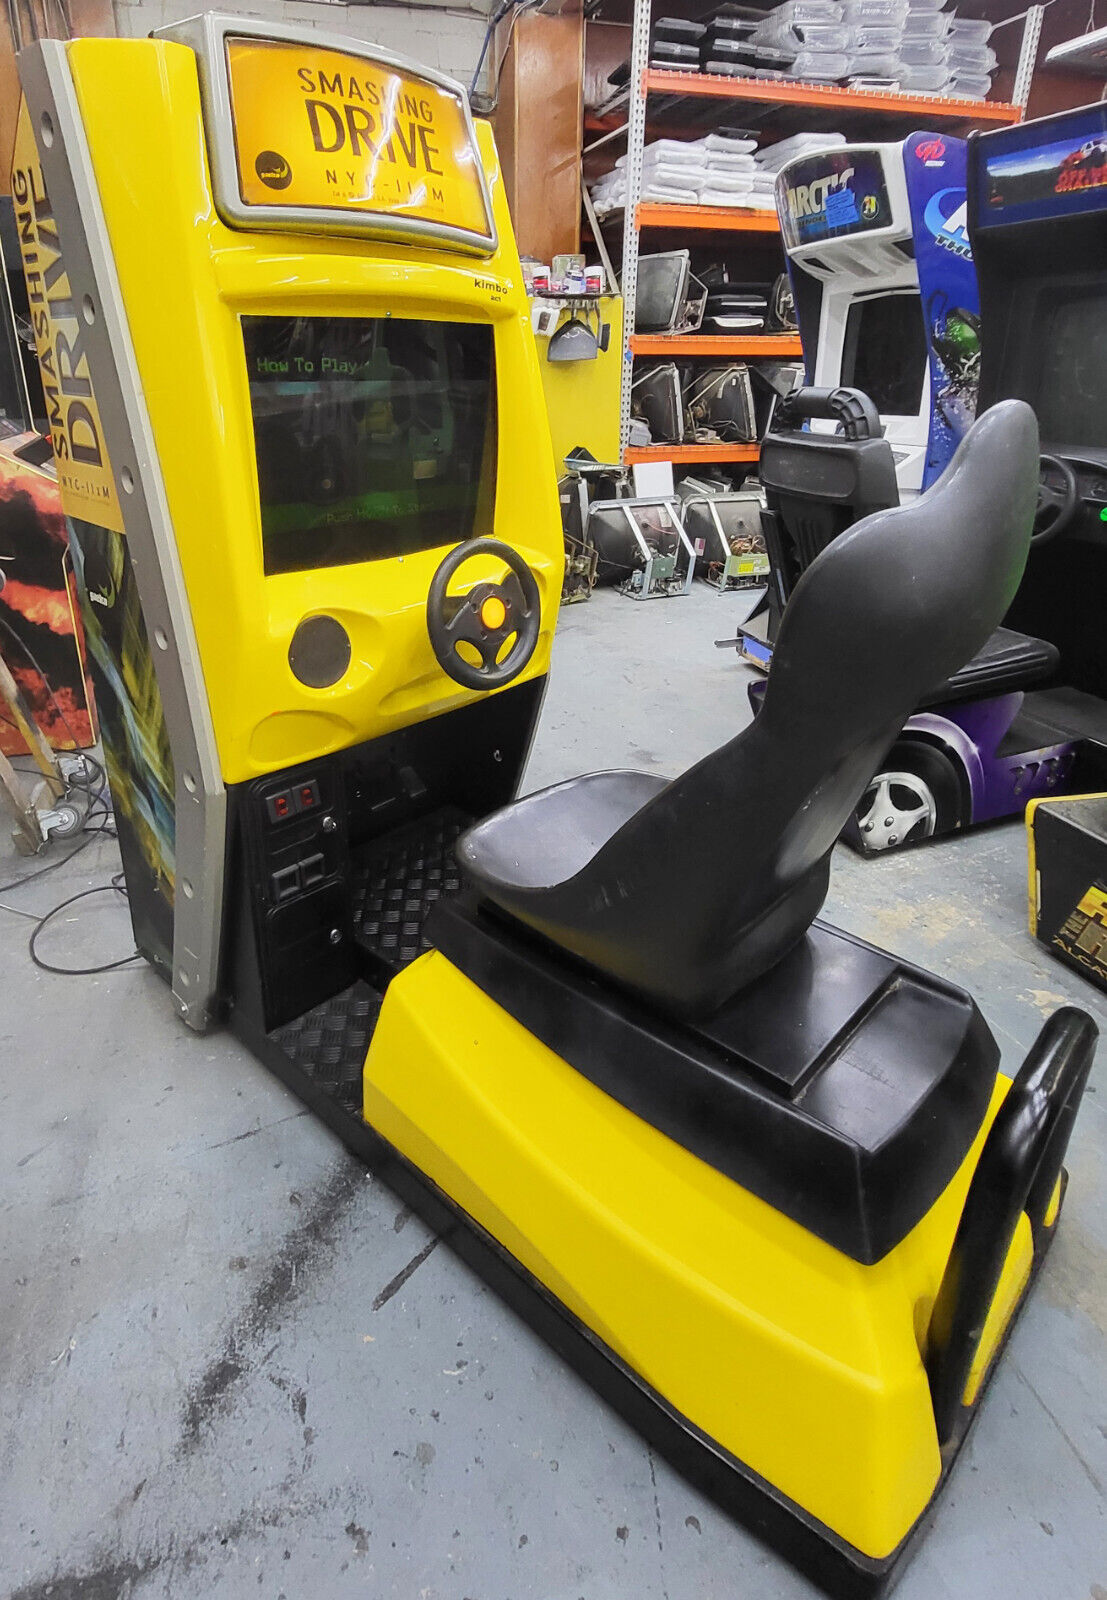 SMASHING DRIVE (Crazy Taxi) Sit Down Arcade Driving Racing Video Game Machine